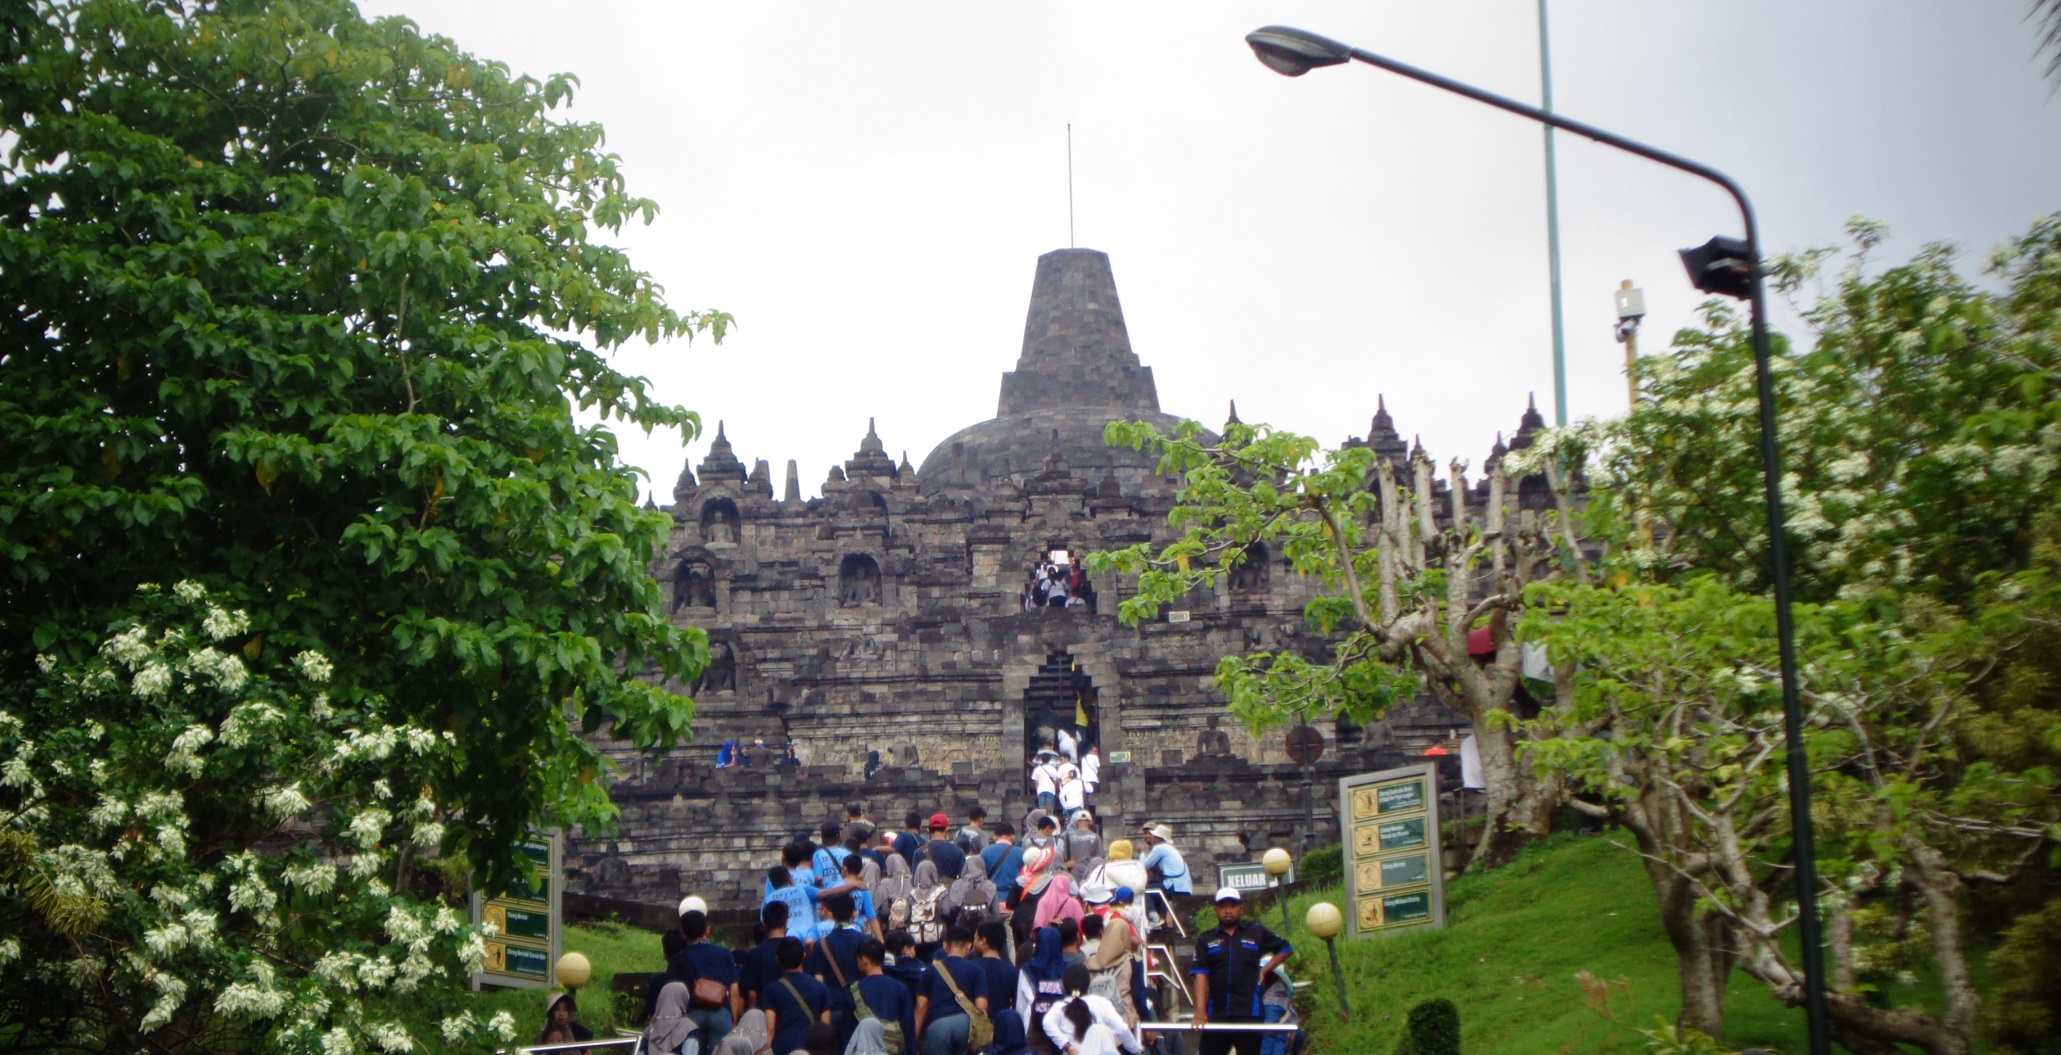 Wisata Candi Borobudur Di Magelang Jawa Tengah